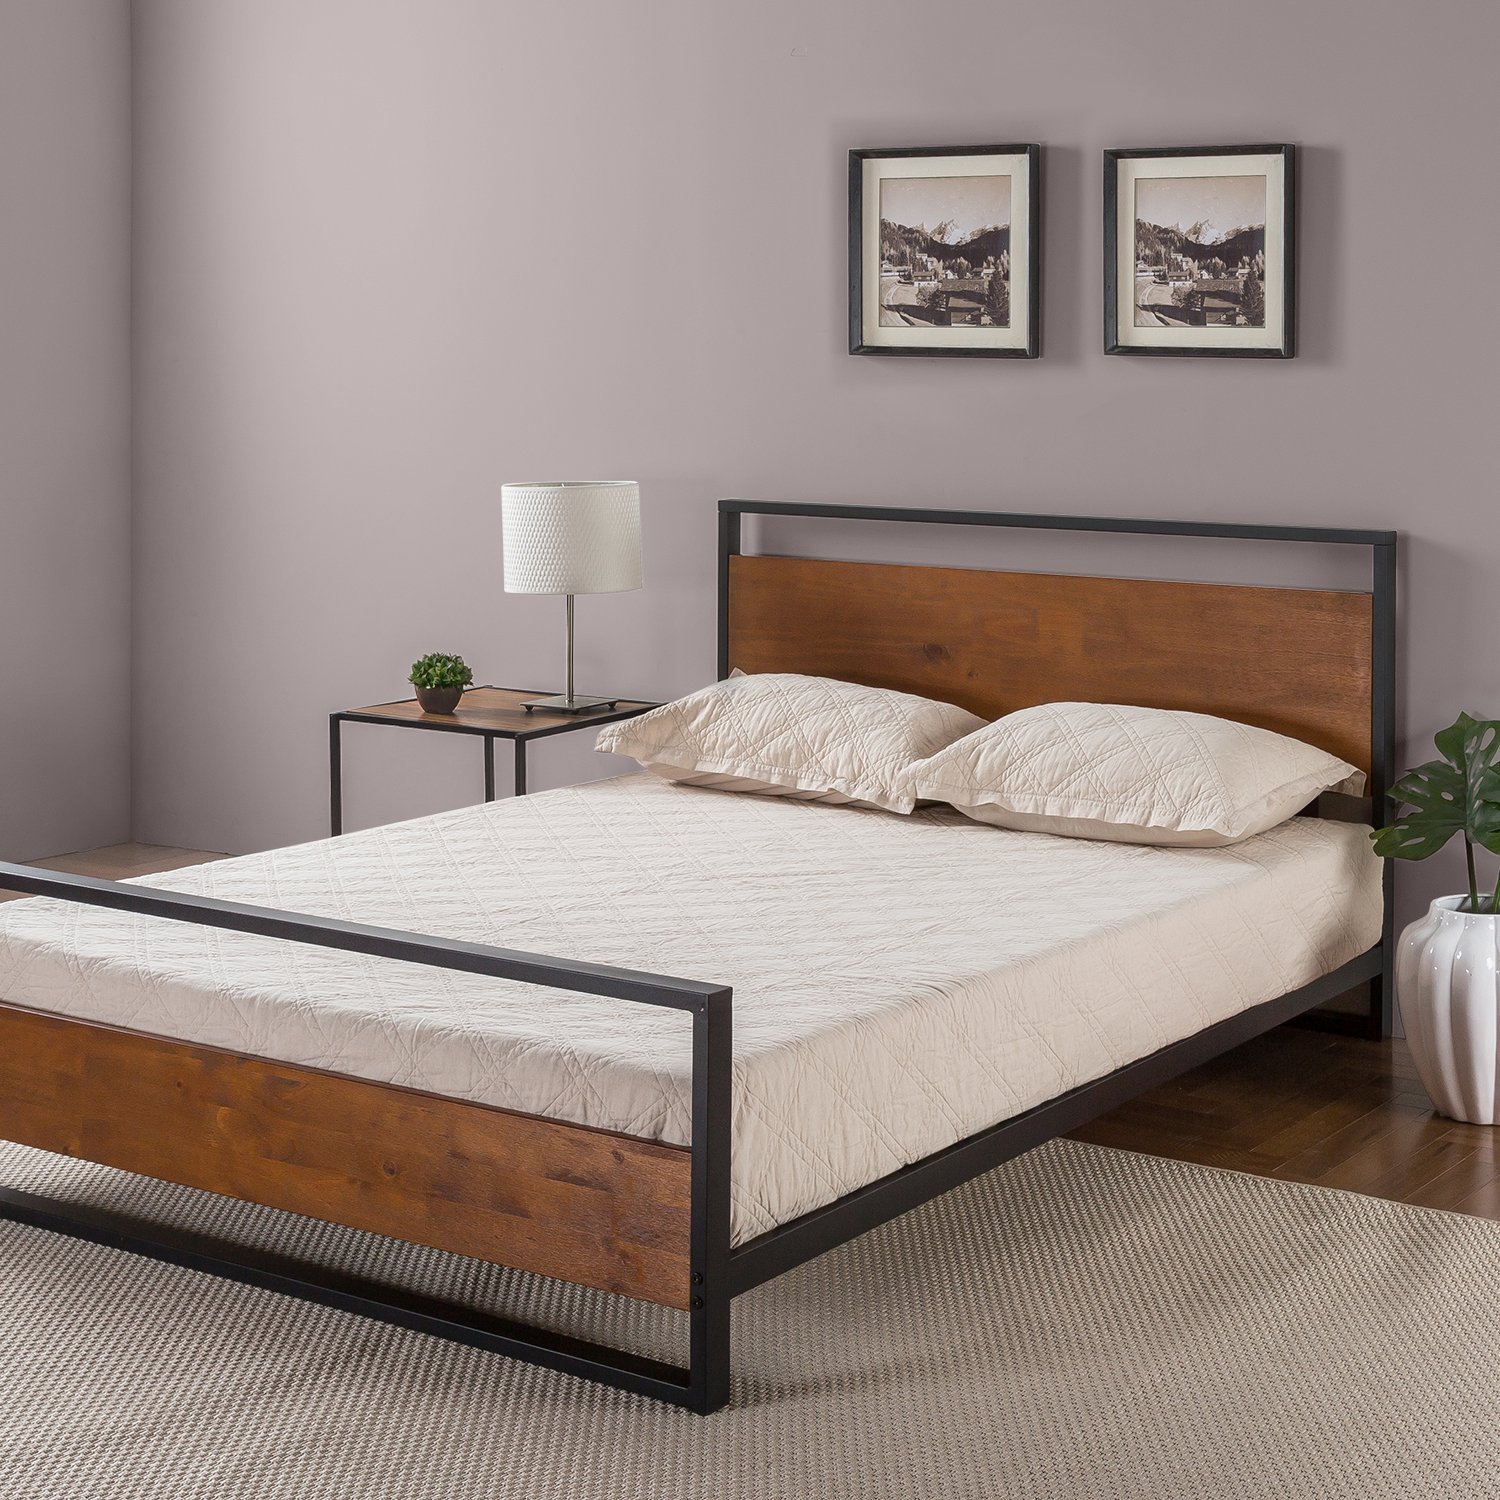 [Review] Zinus Ironline Metal and Wood Platform Bed ...